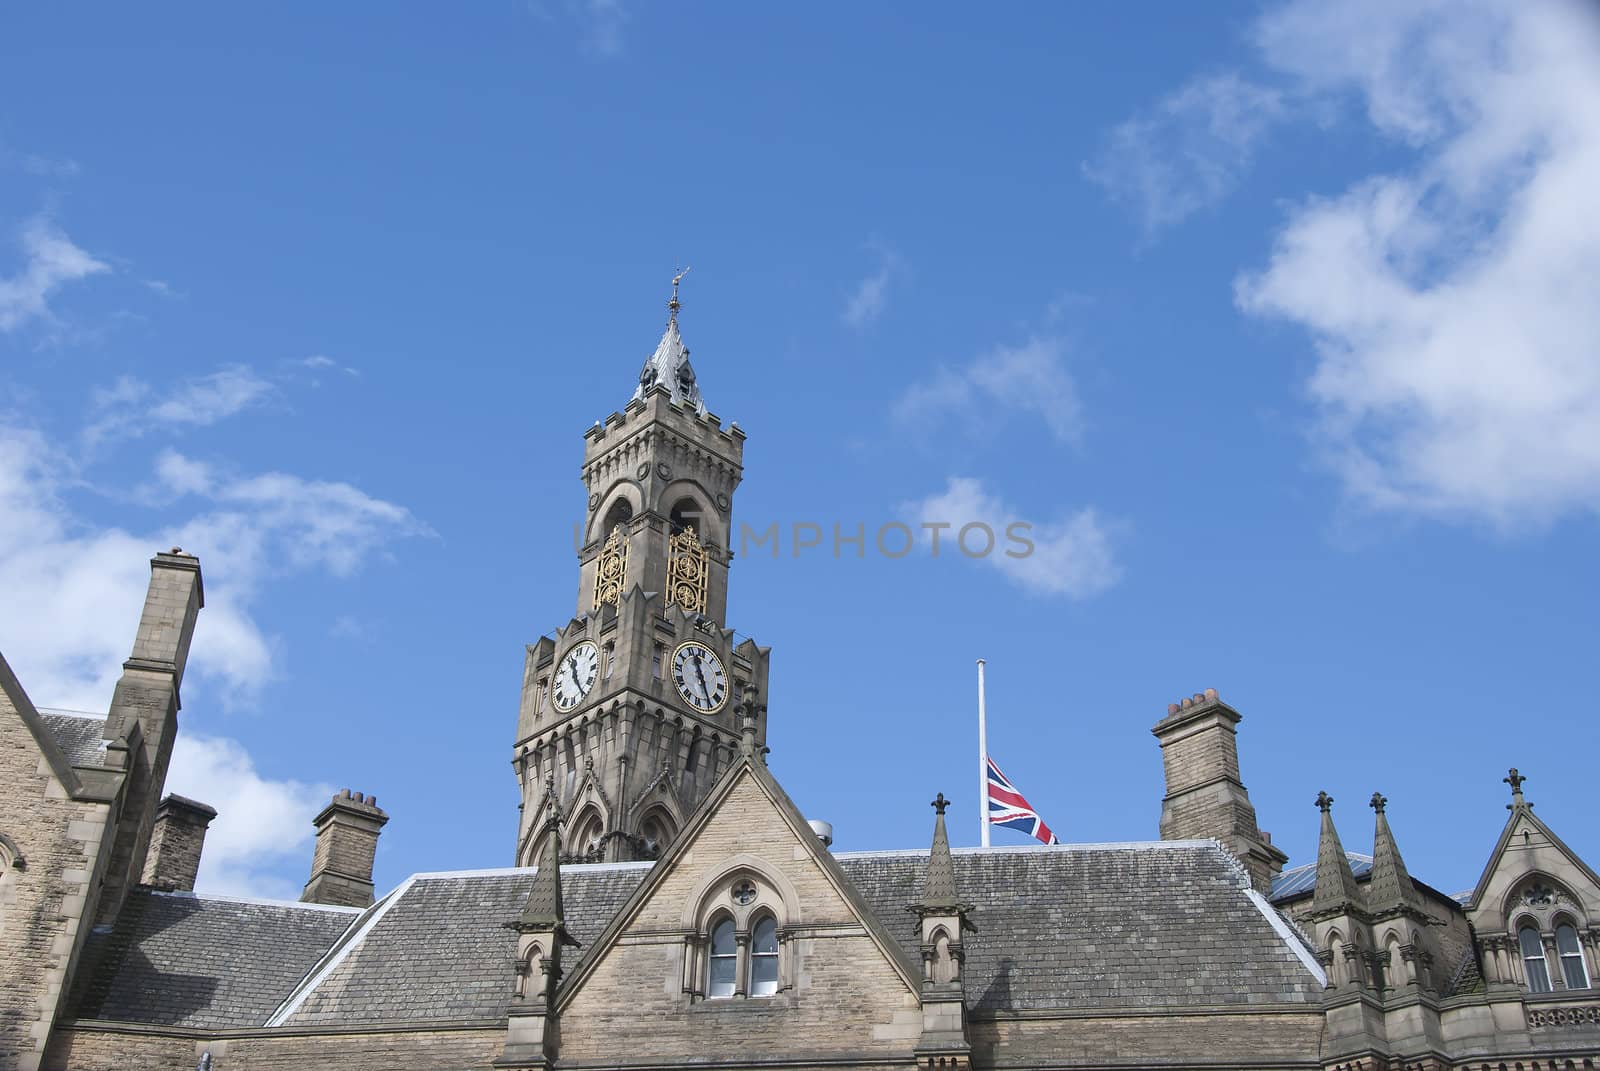 Bradford Town Hall by d40xboy